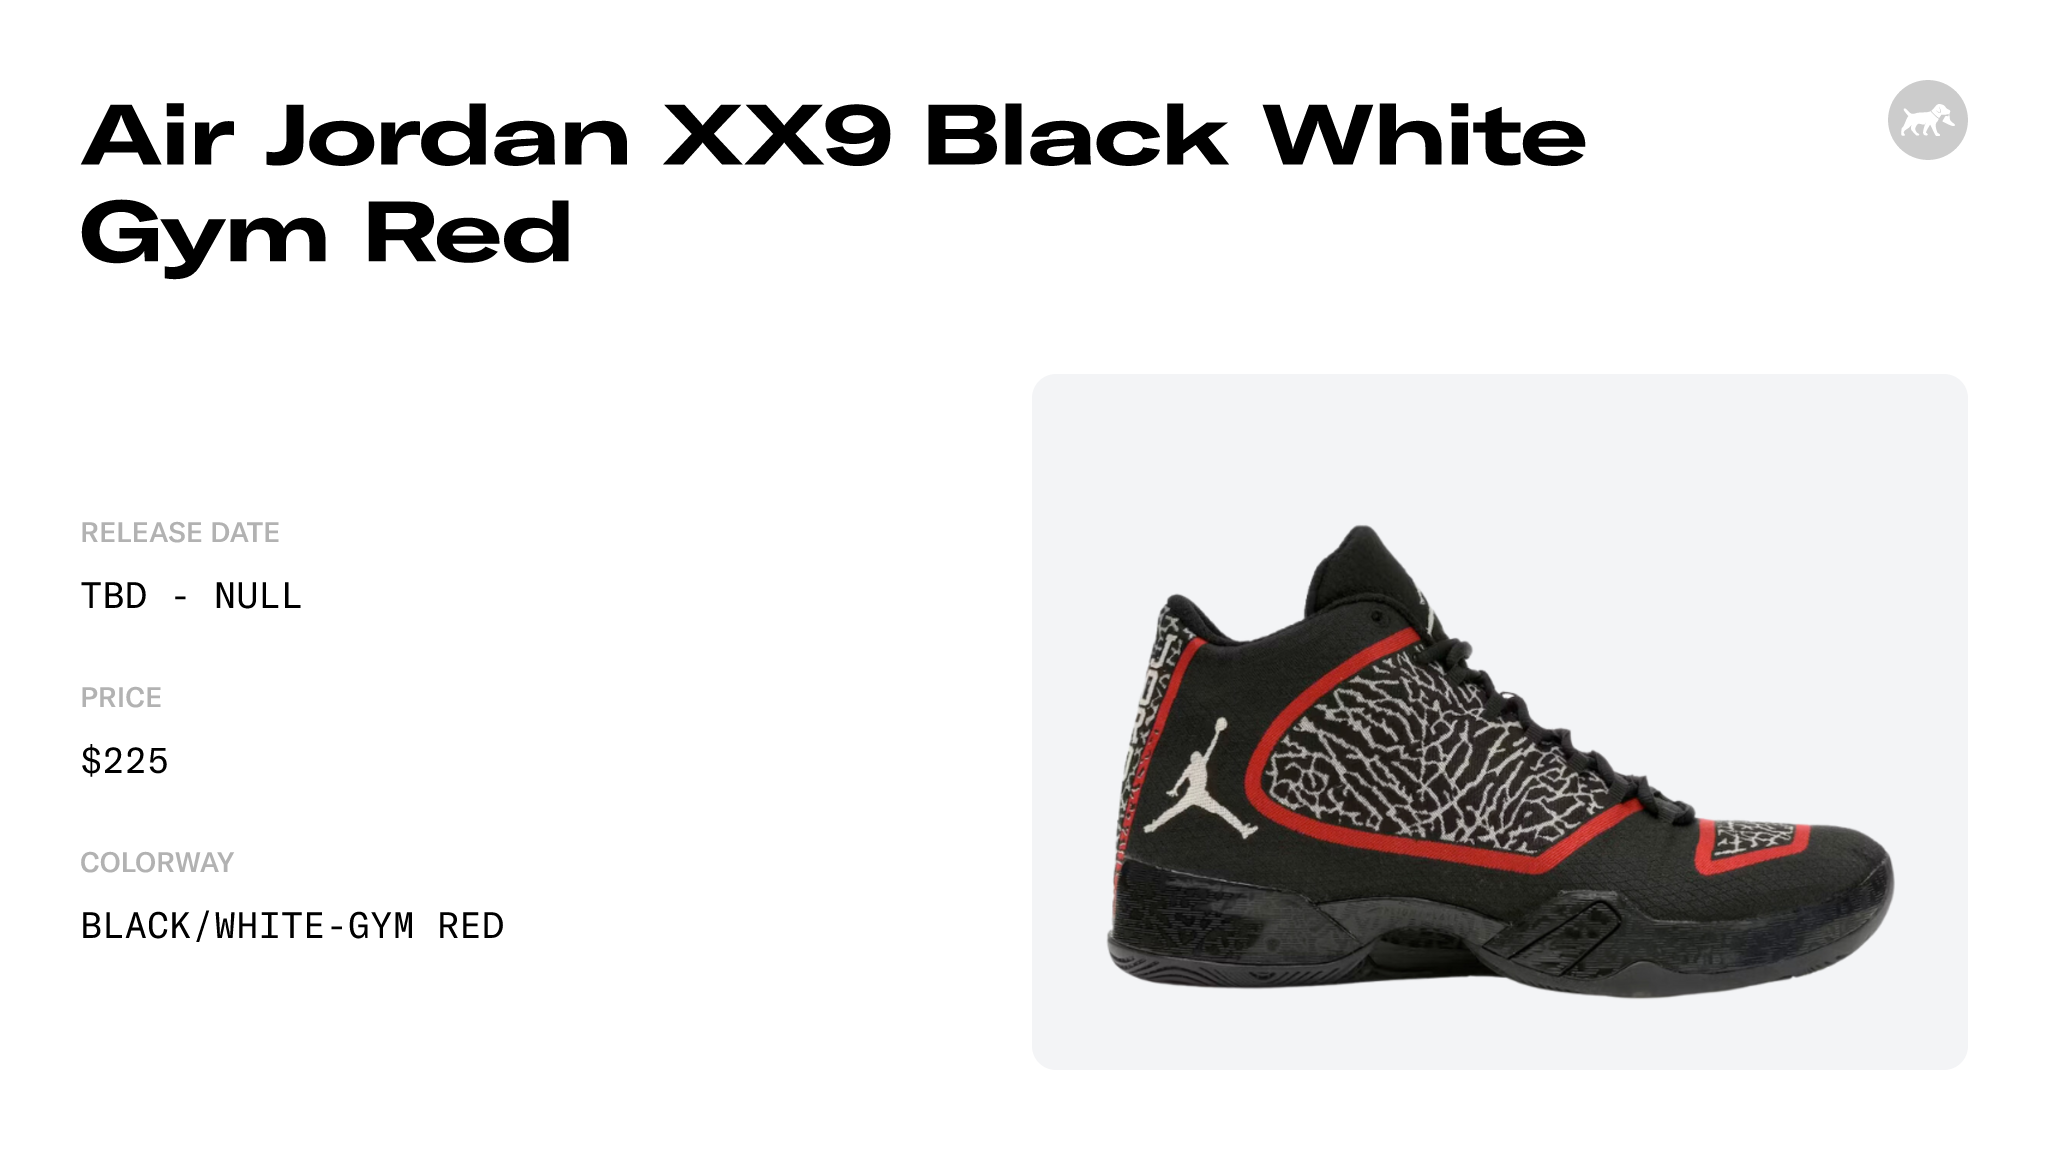 Air Jordan XX9 Black White Gym Red - 695515-023 Raffles and Release Date